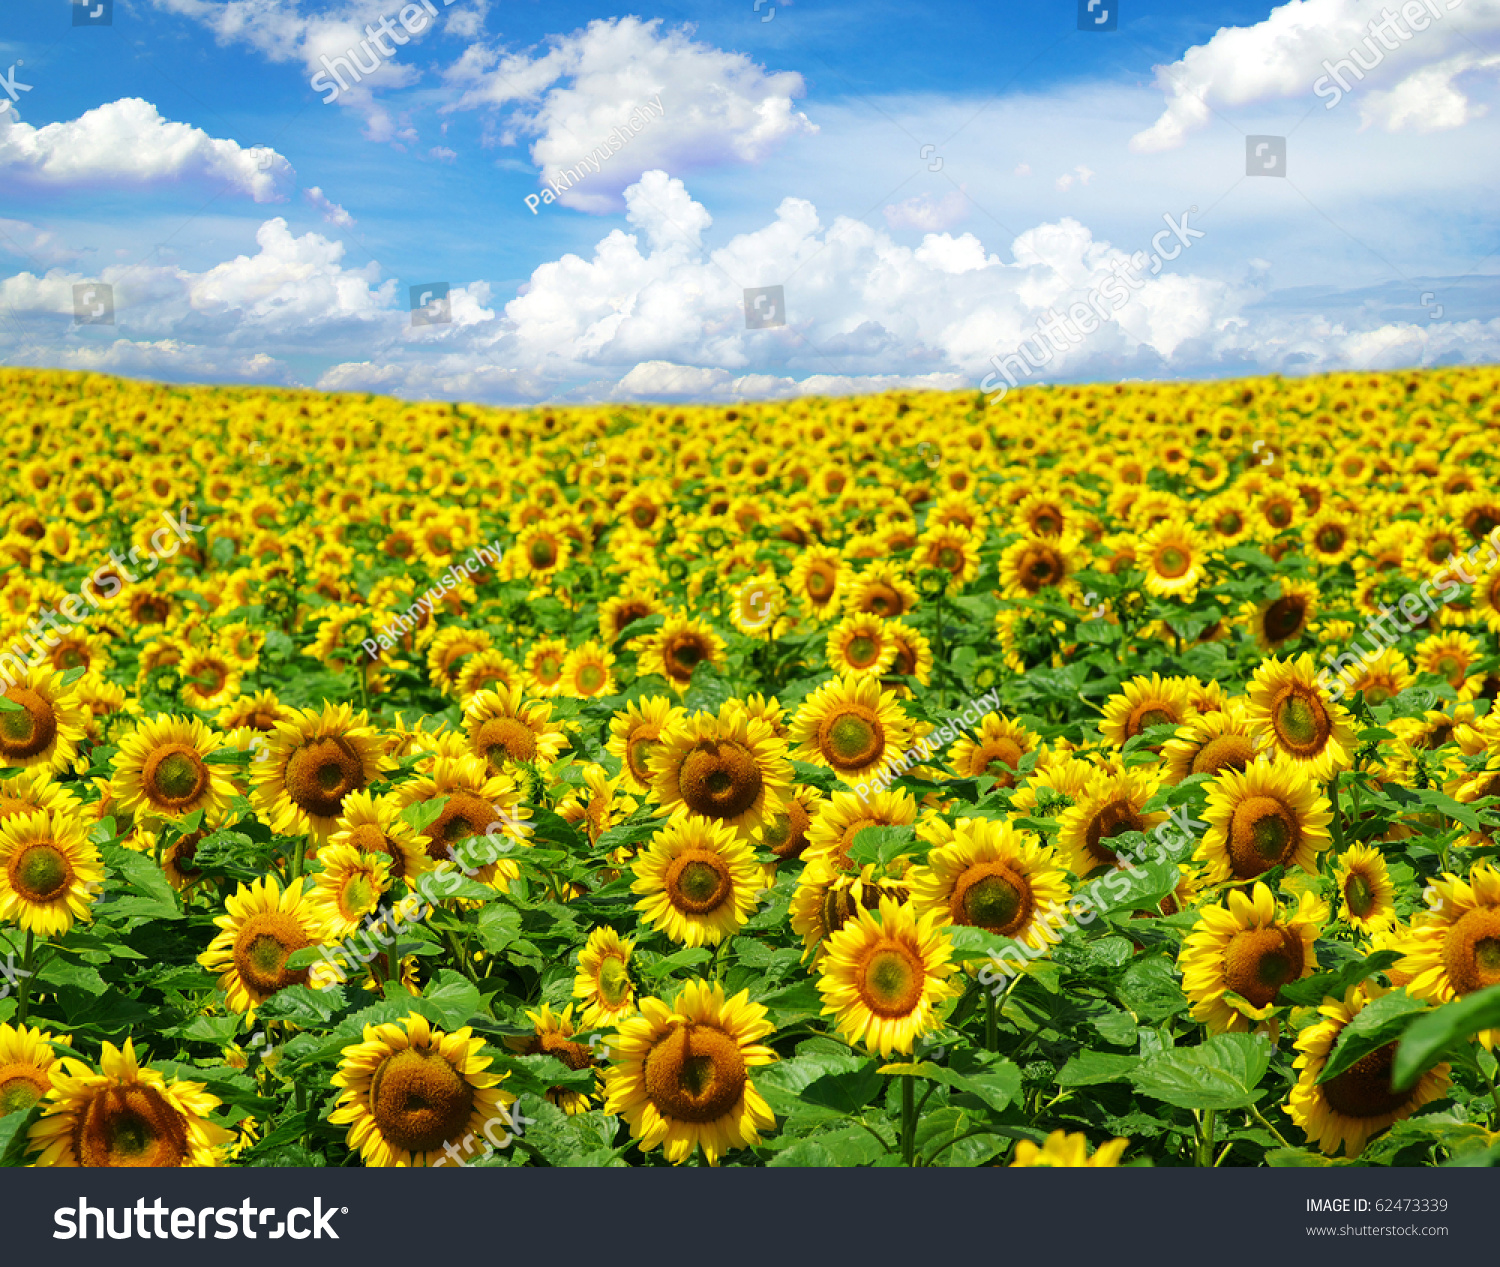 Sunflower Field Stock Photo 62473339 - Shutterstock